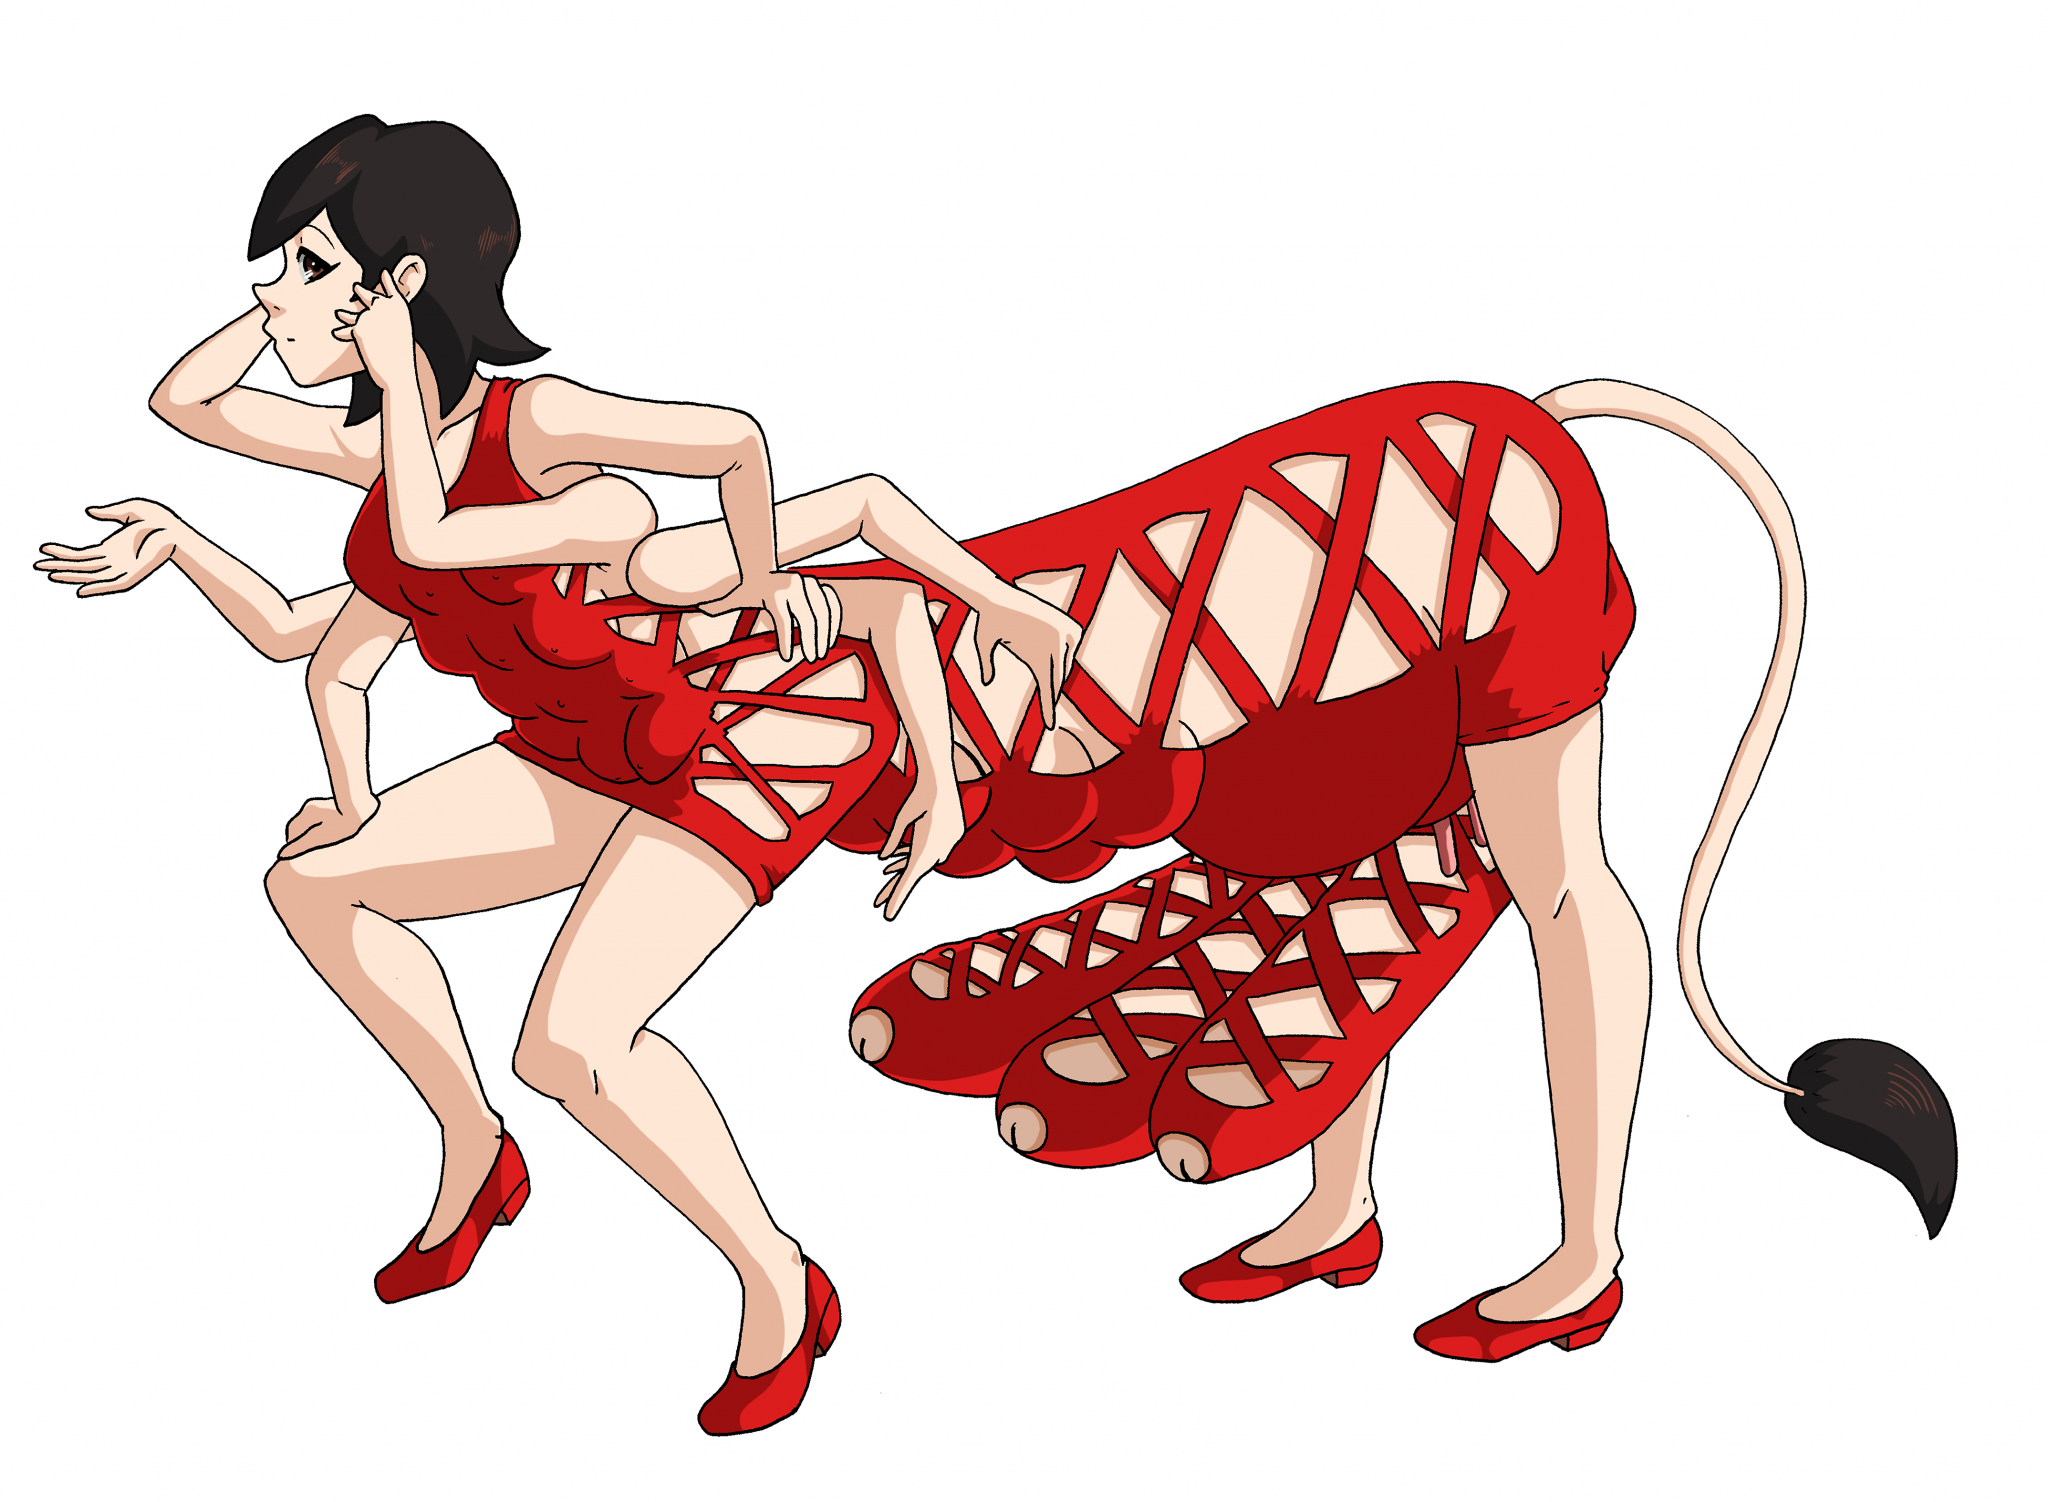 The Diner Girl in the Red Dress
Drawn by [url=https://twitter.com/Tsuchihara_k]Tsuchihara[/url]
Keywords: Roselyn